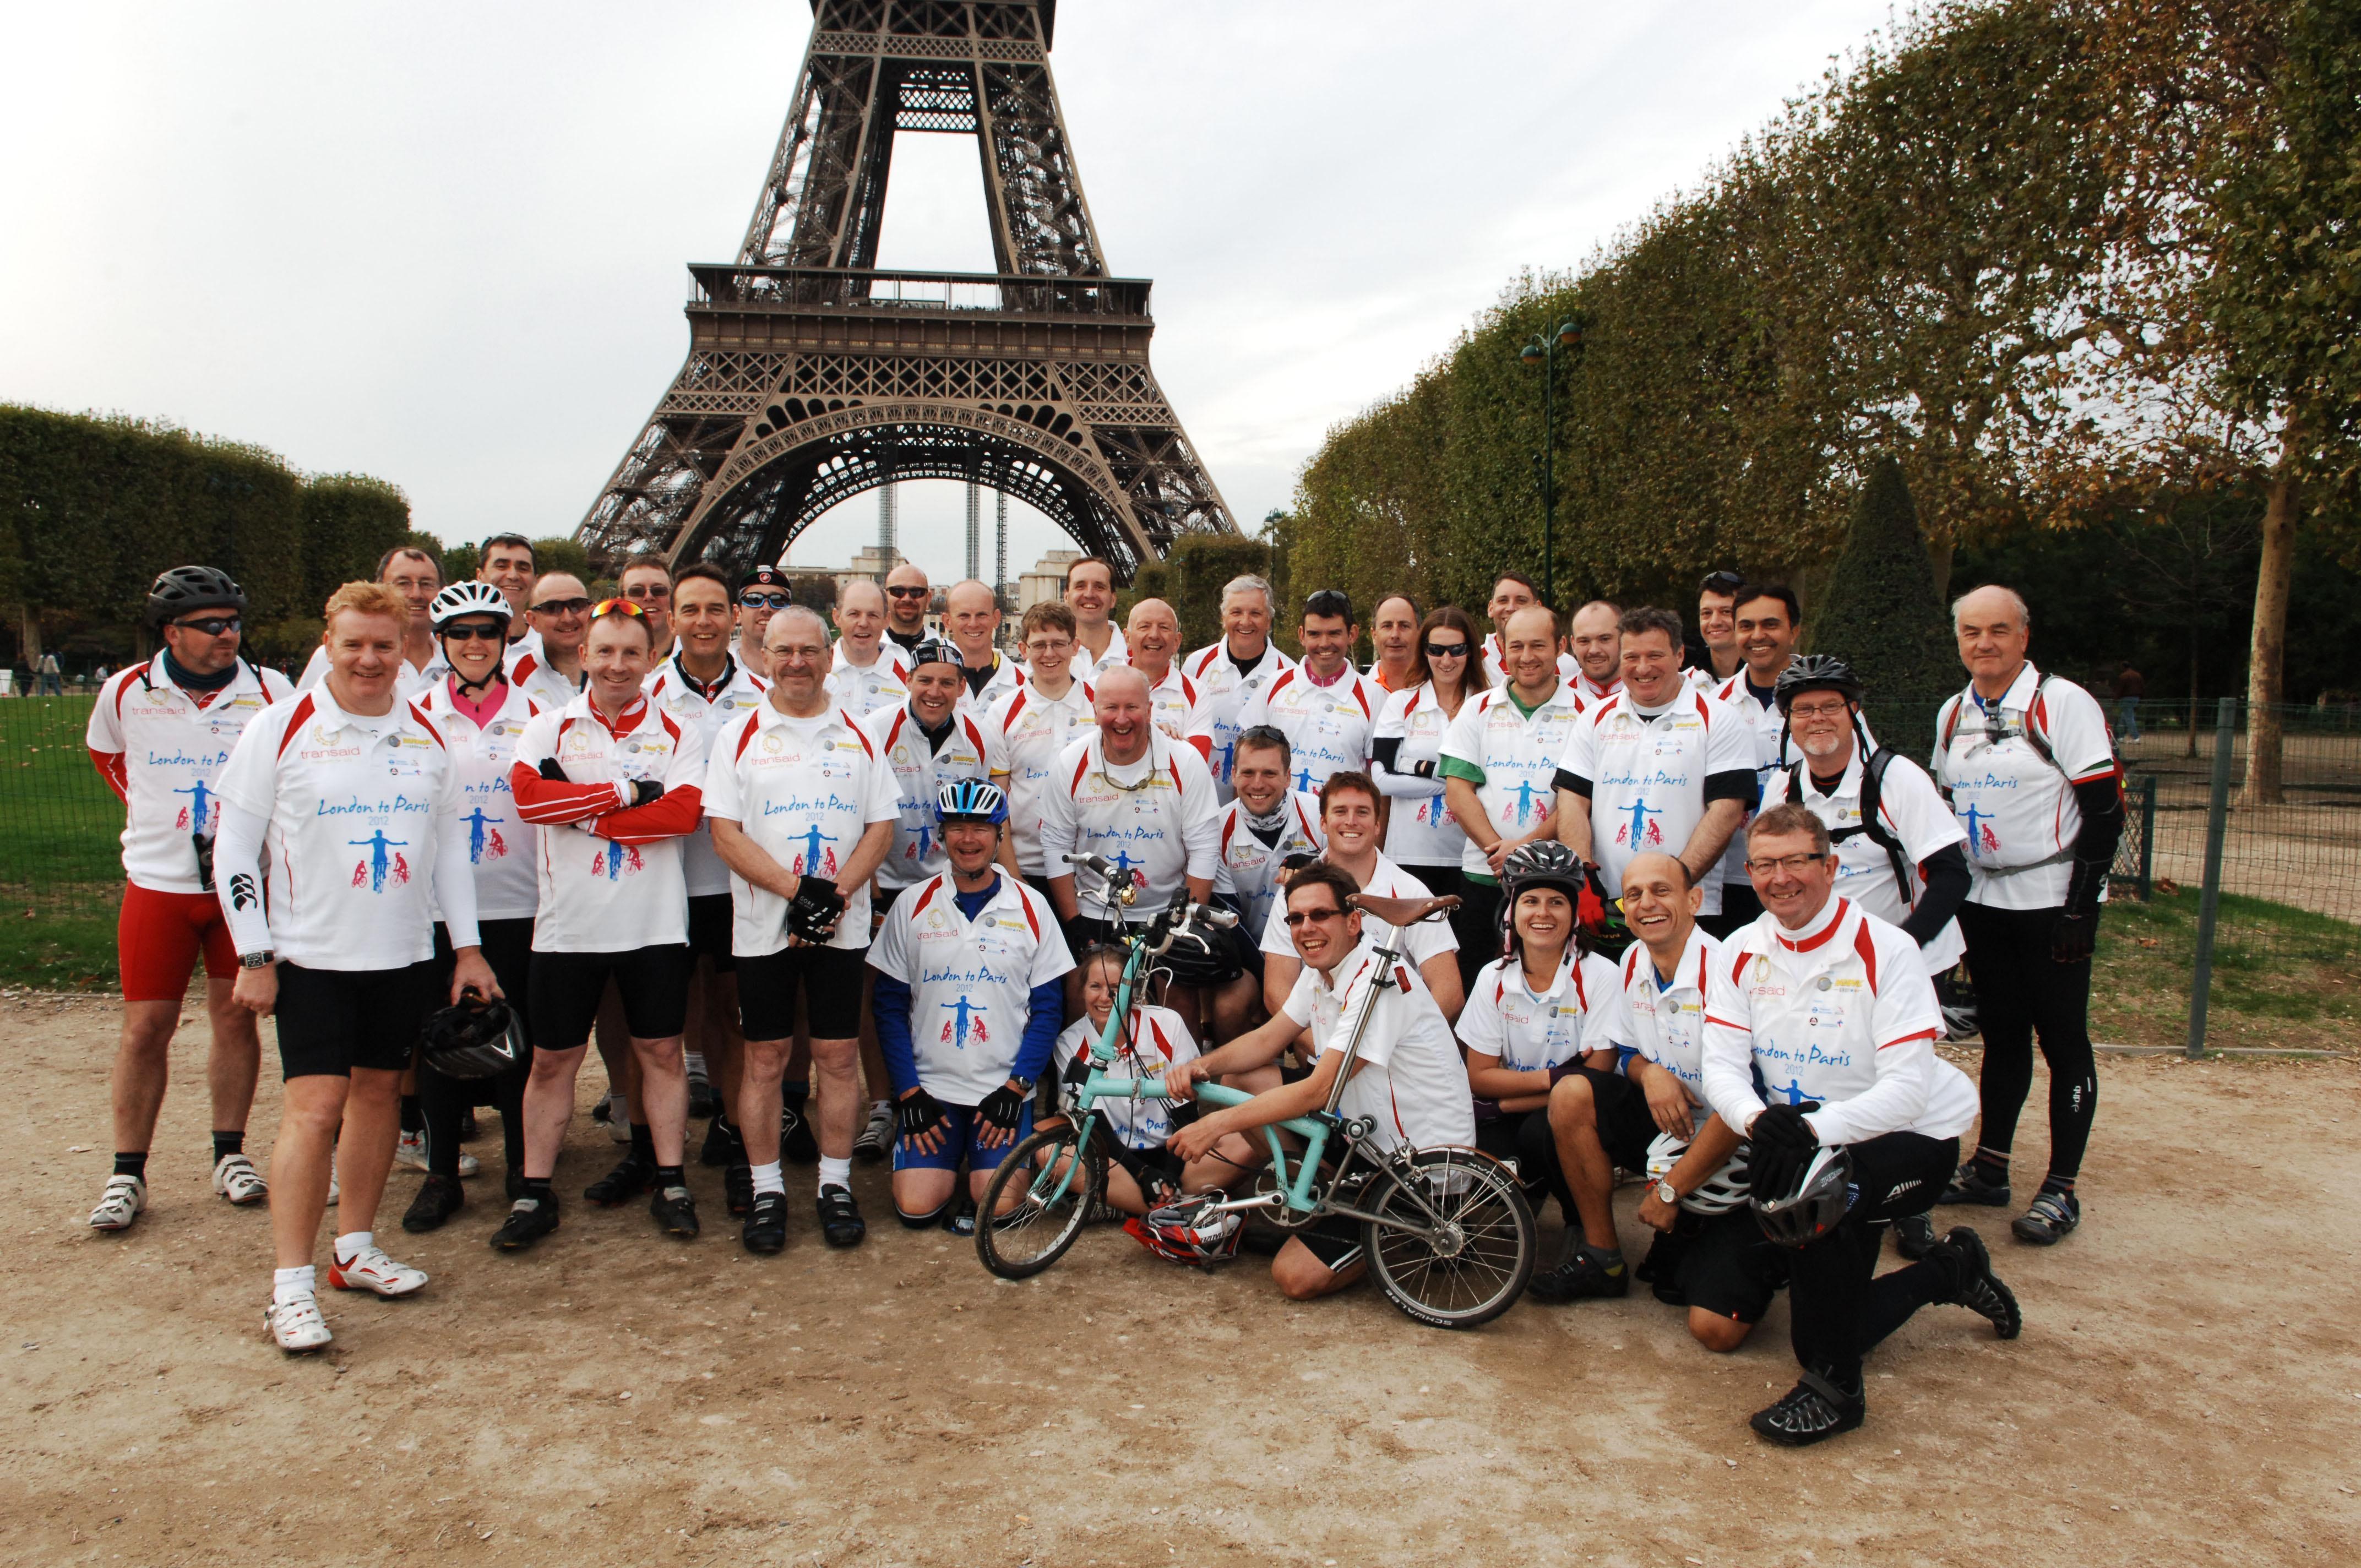 London to Paris challenge launched!